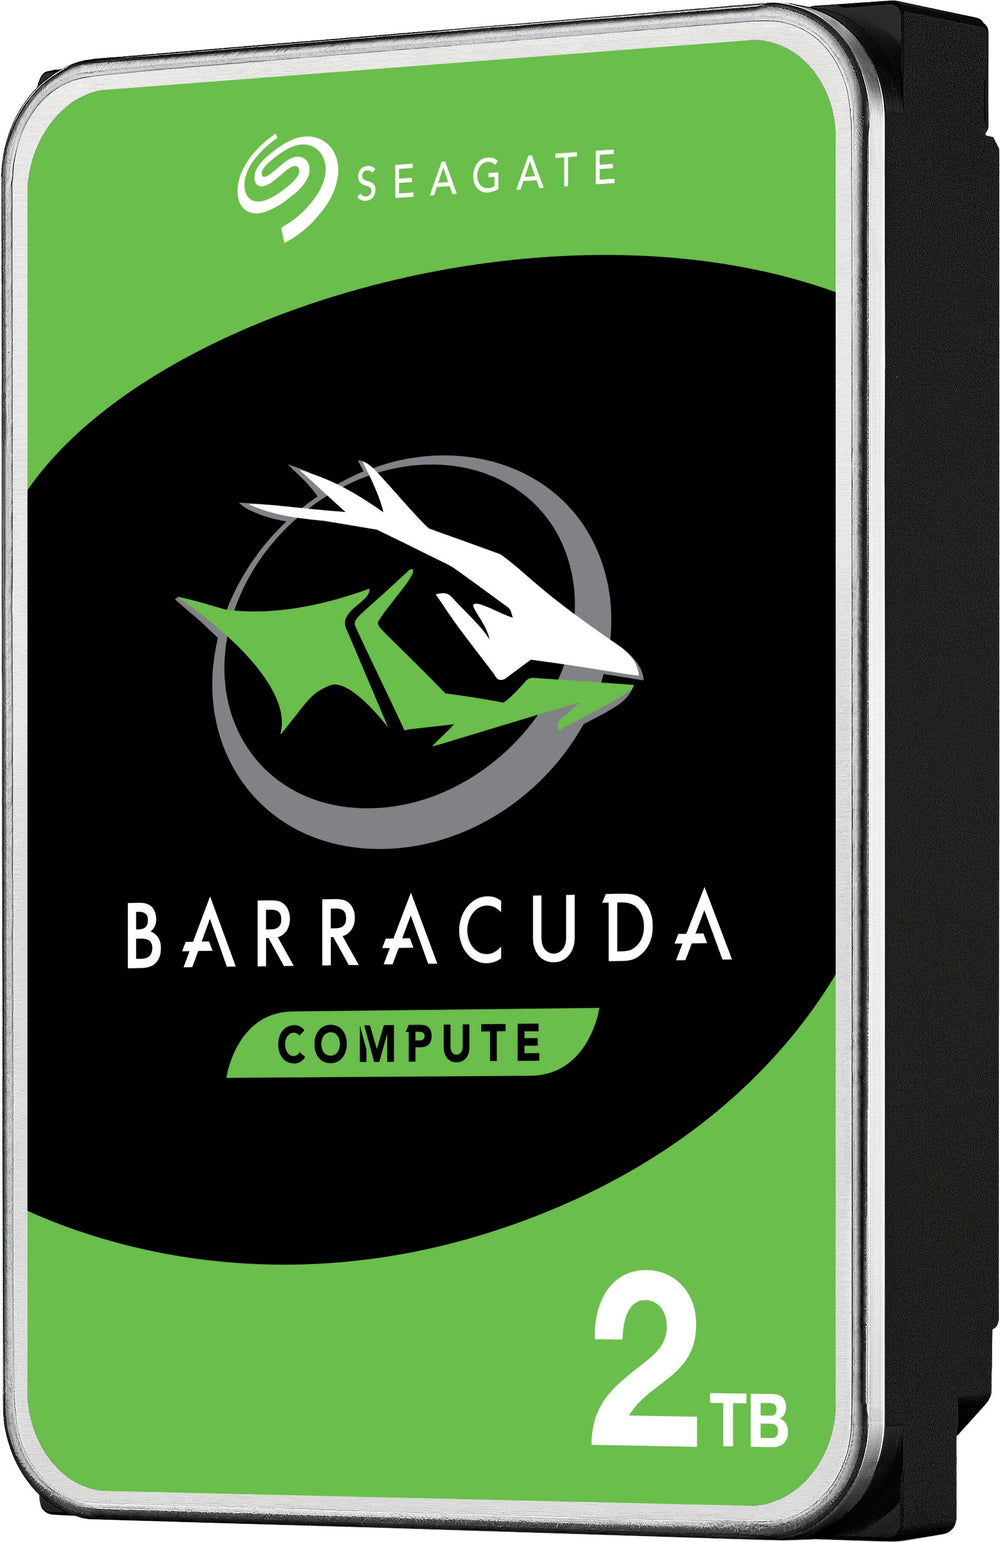 Seagate - Barracuda 2TB Internal SATA Hard Drive for Desktops_1